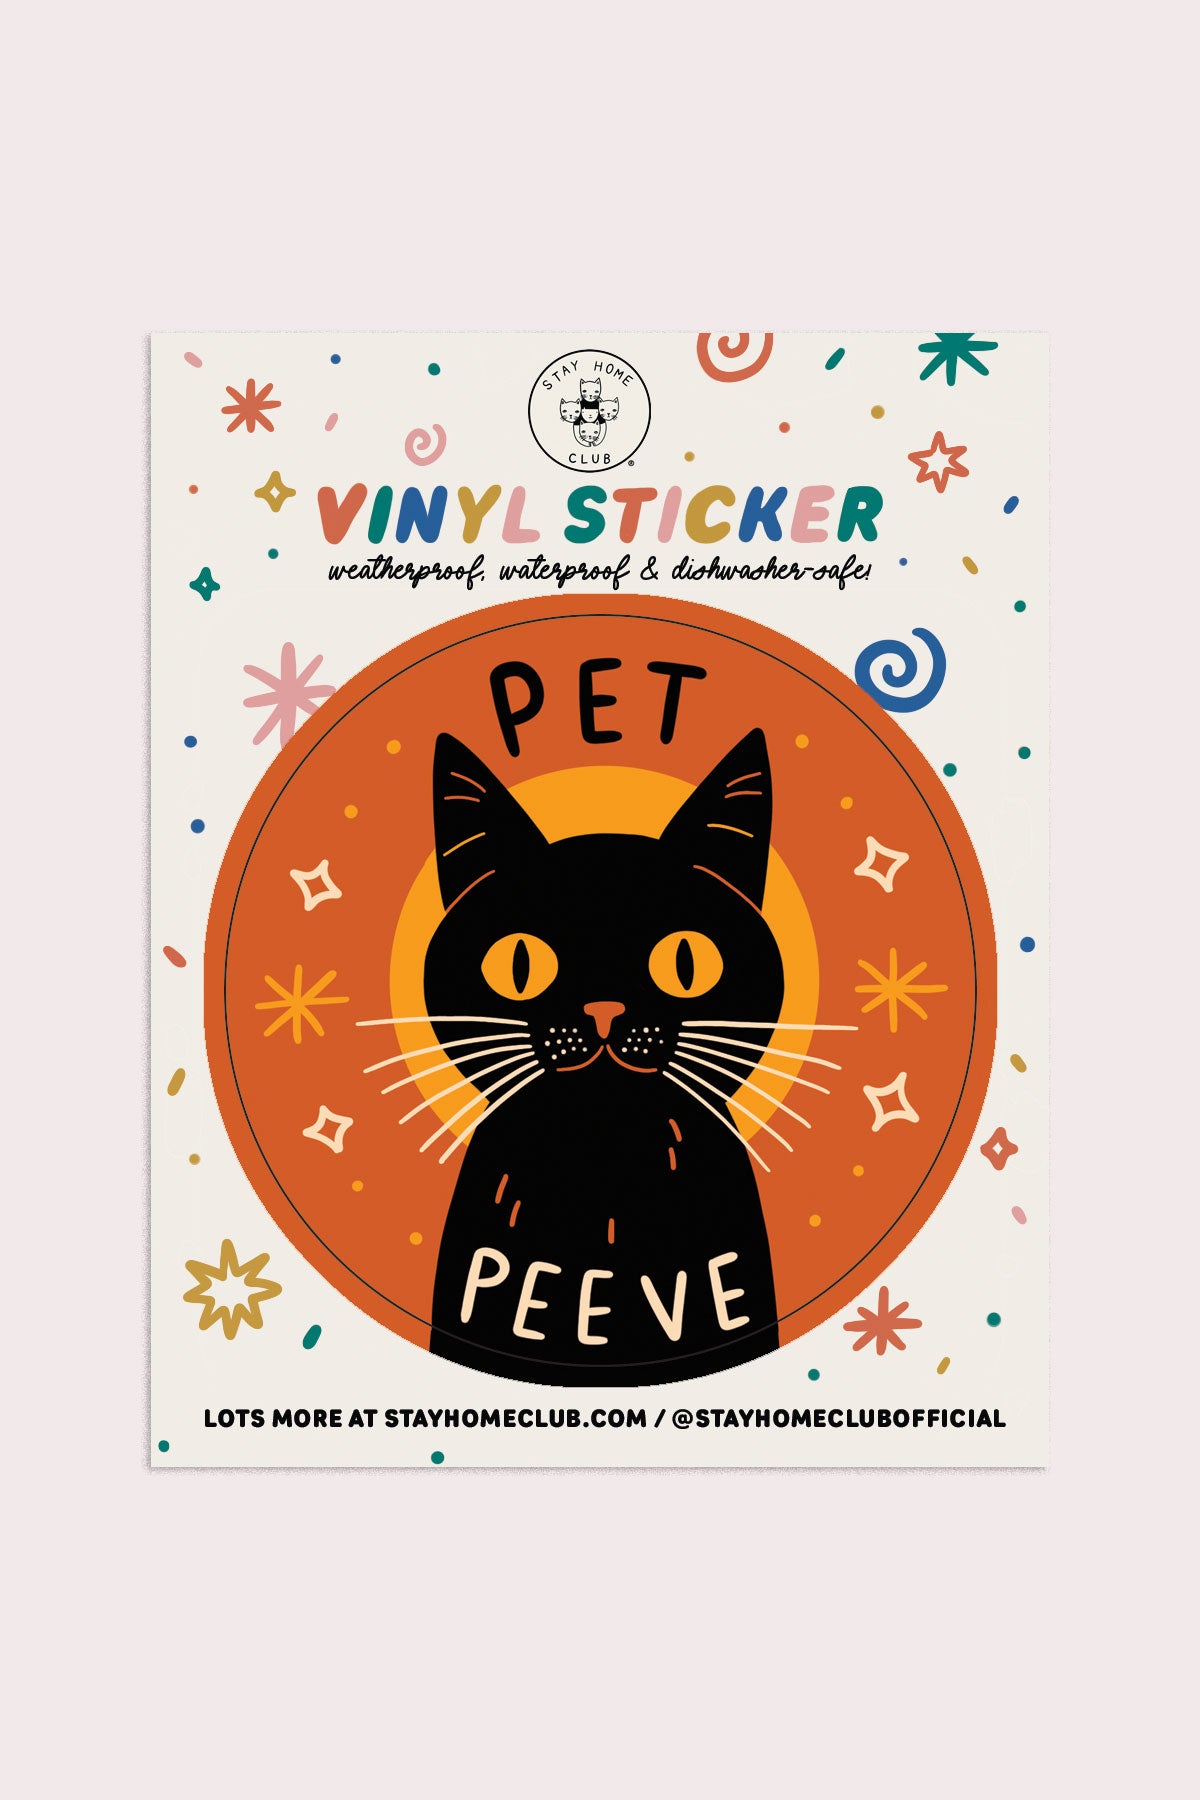 Pet Peeve Vinyl Sticker